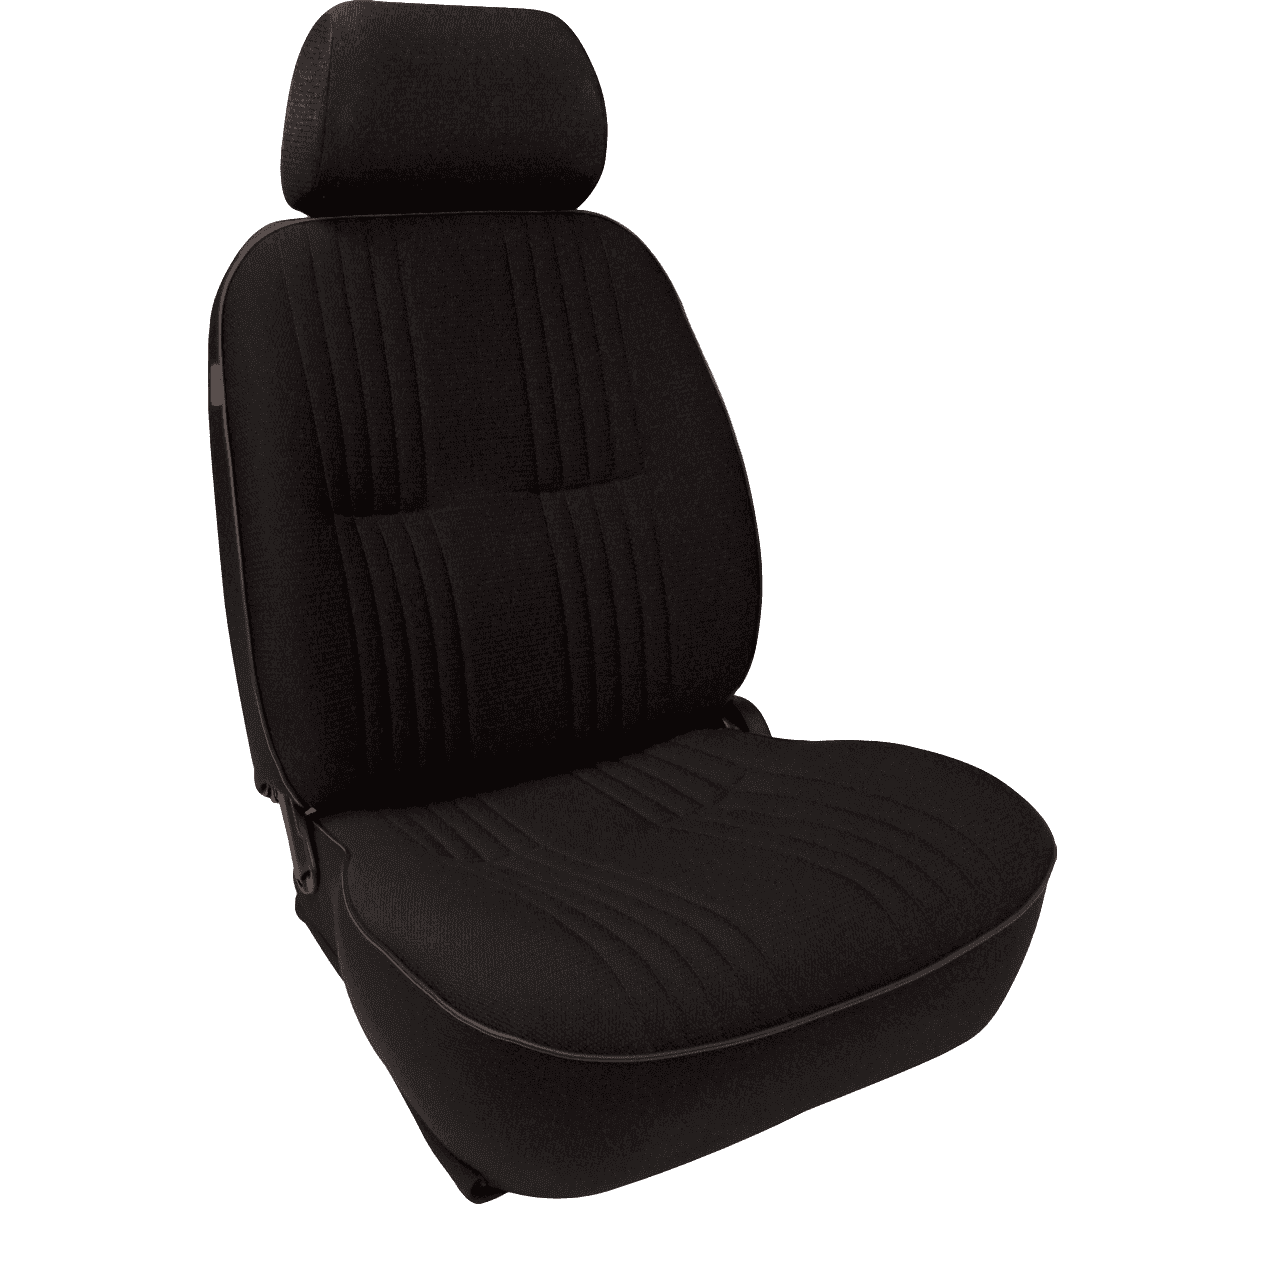 ProCar Pro 90 Reclining Seats